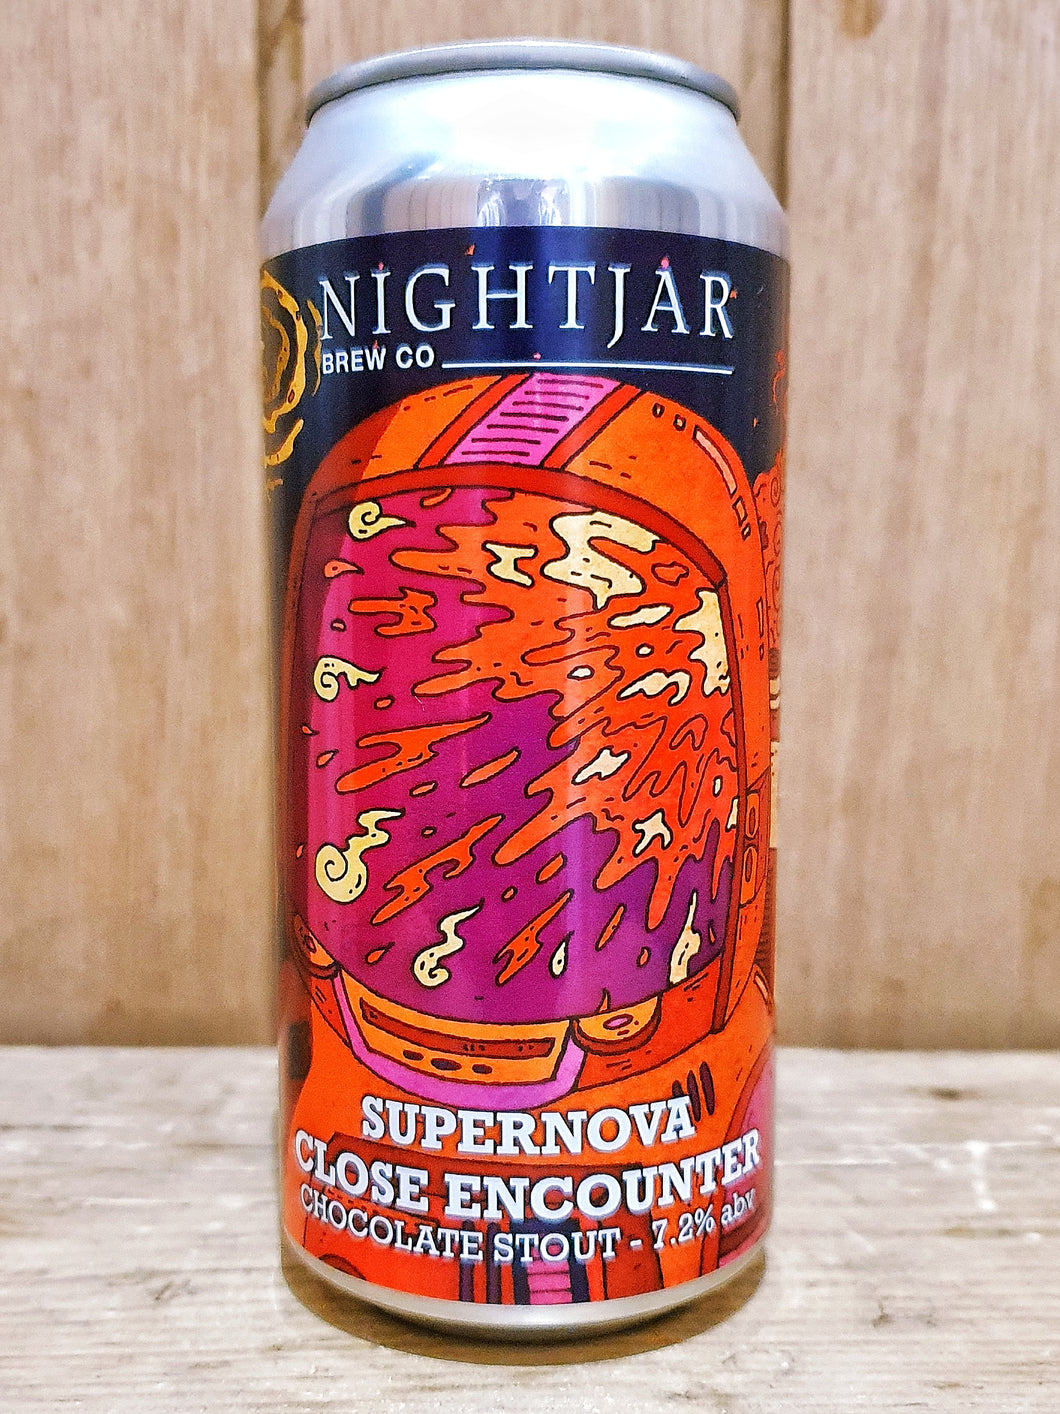 Nightjar Brew Co - Supernova Close Encounter